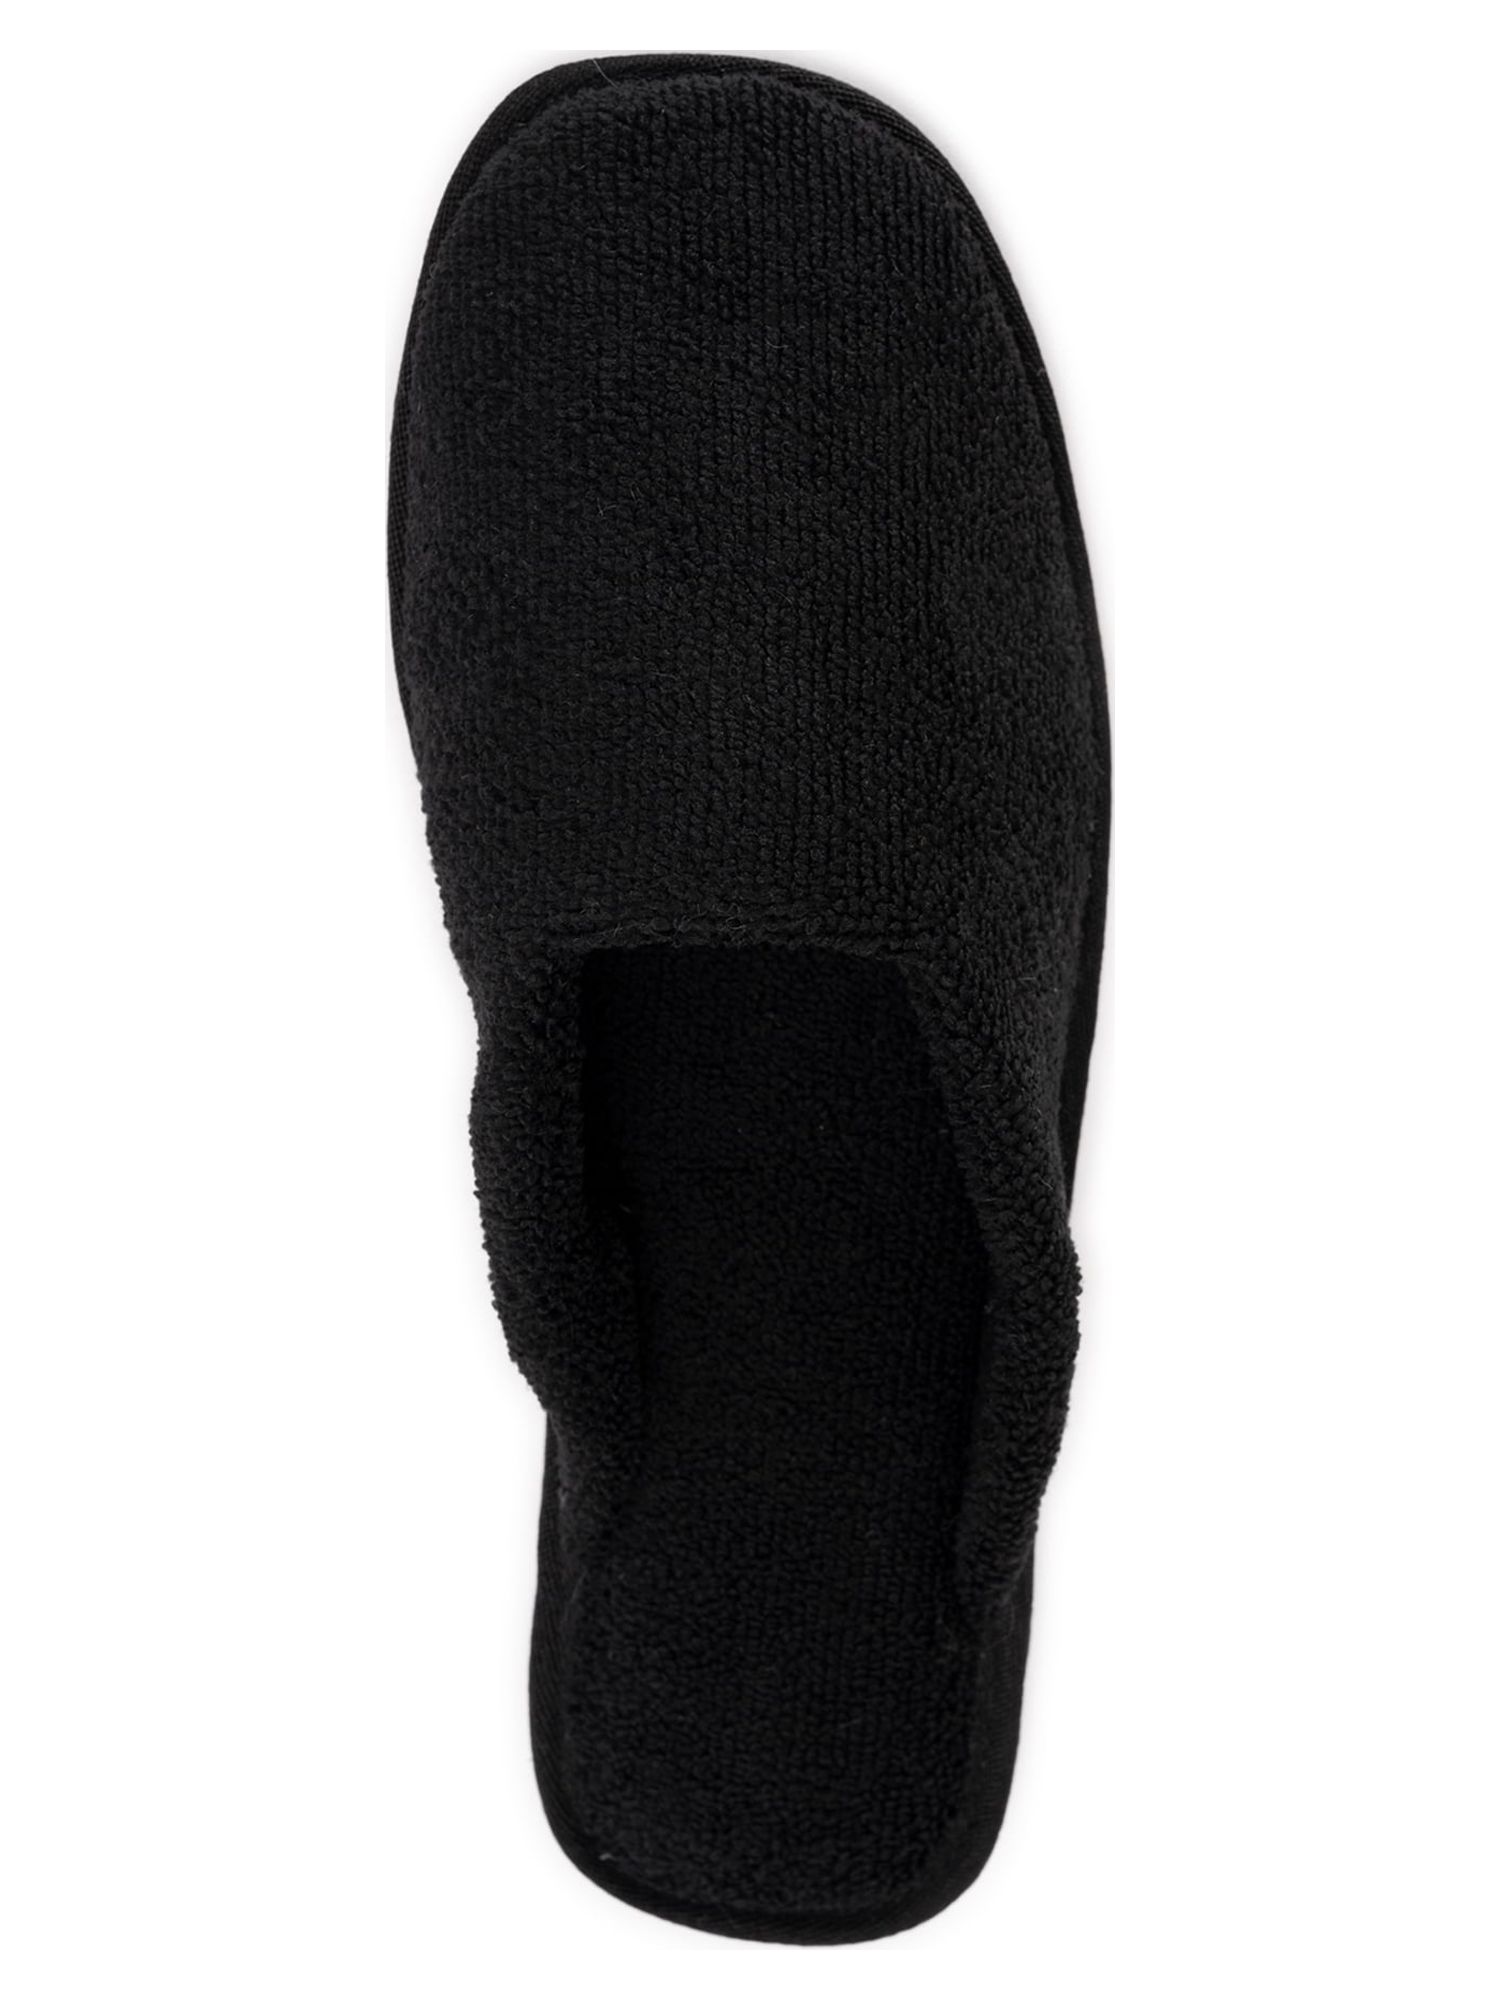 Muk Luks Women's Terry Cloth Square Toe Mule Slipper - image 5 of 6